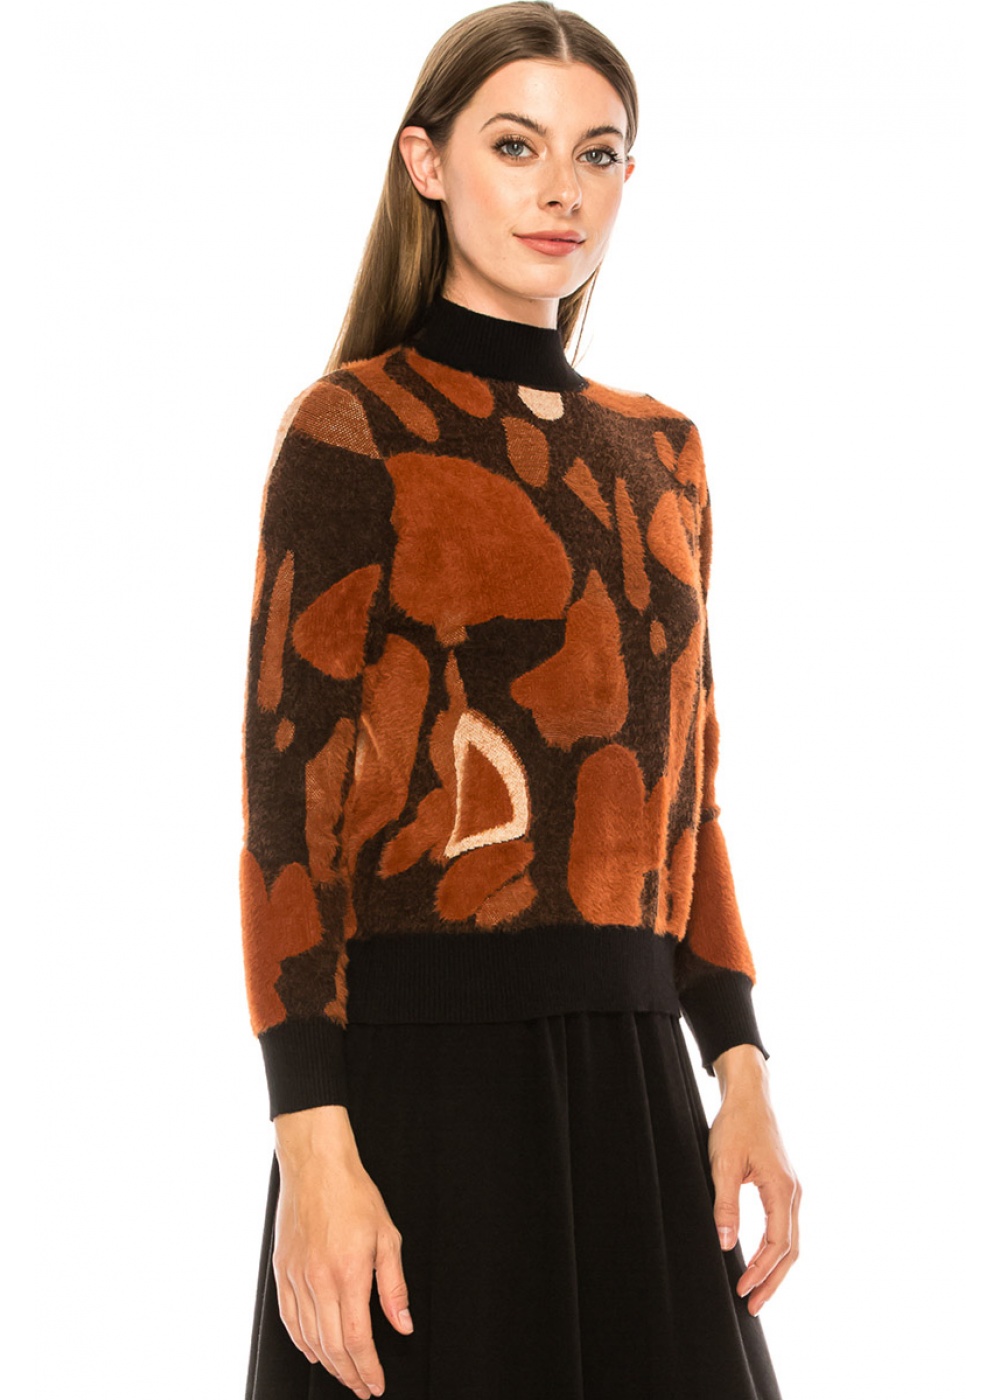 Asymmetrical print sweater in rust & black 